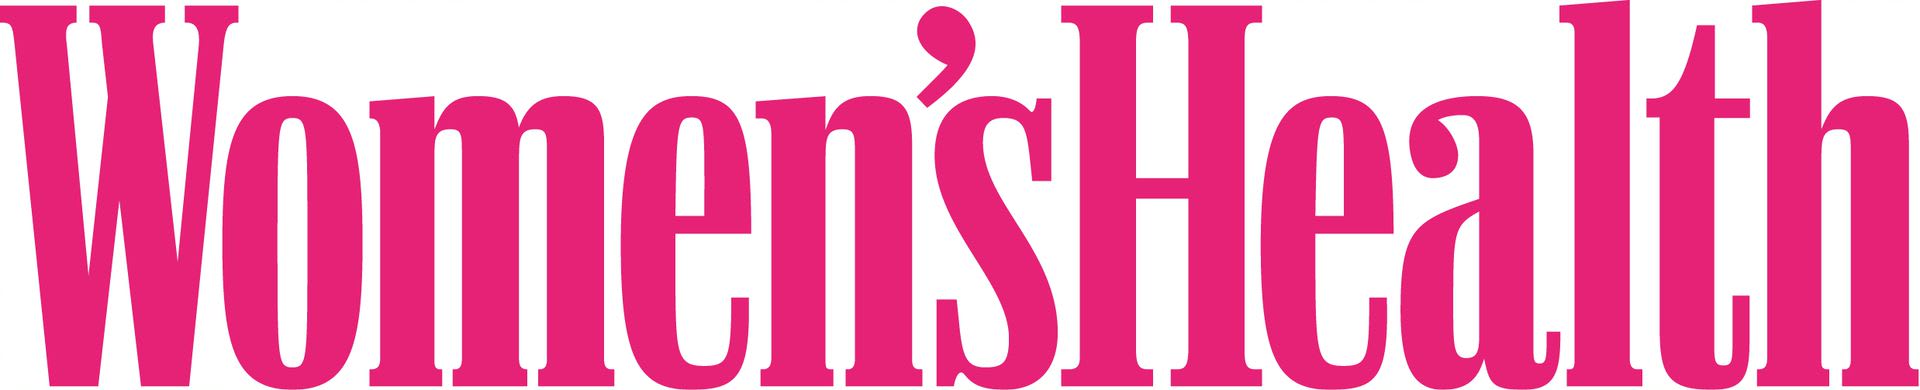 Logo Women's Health